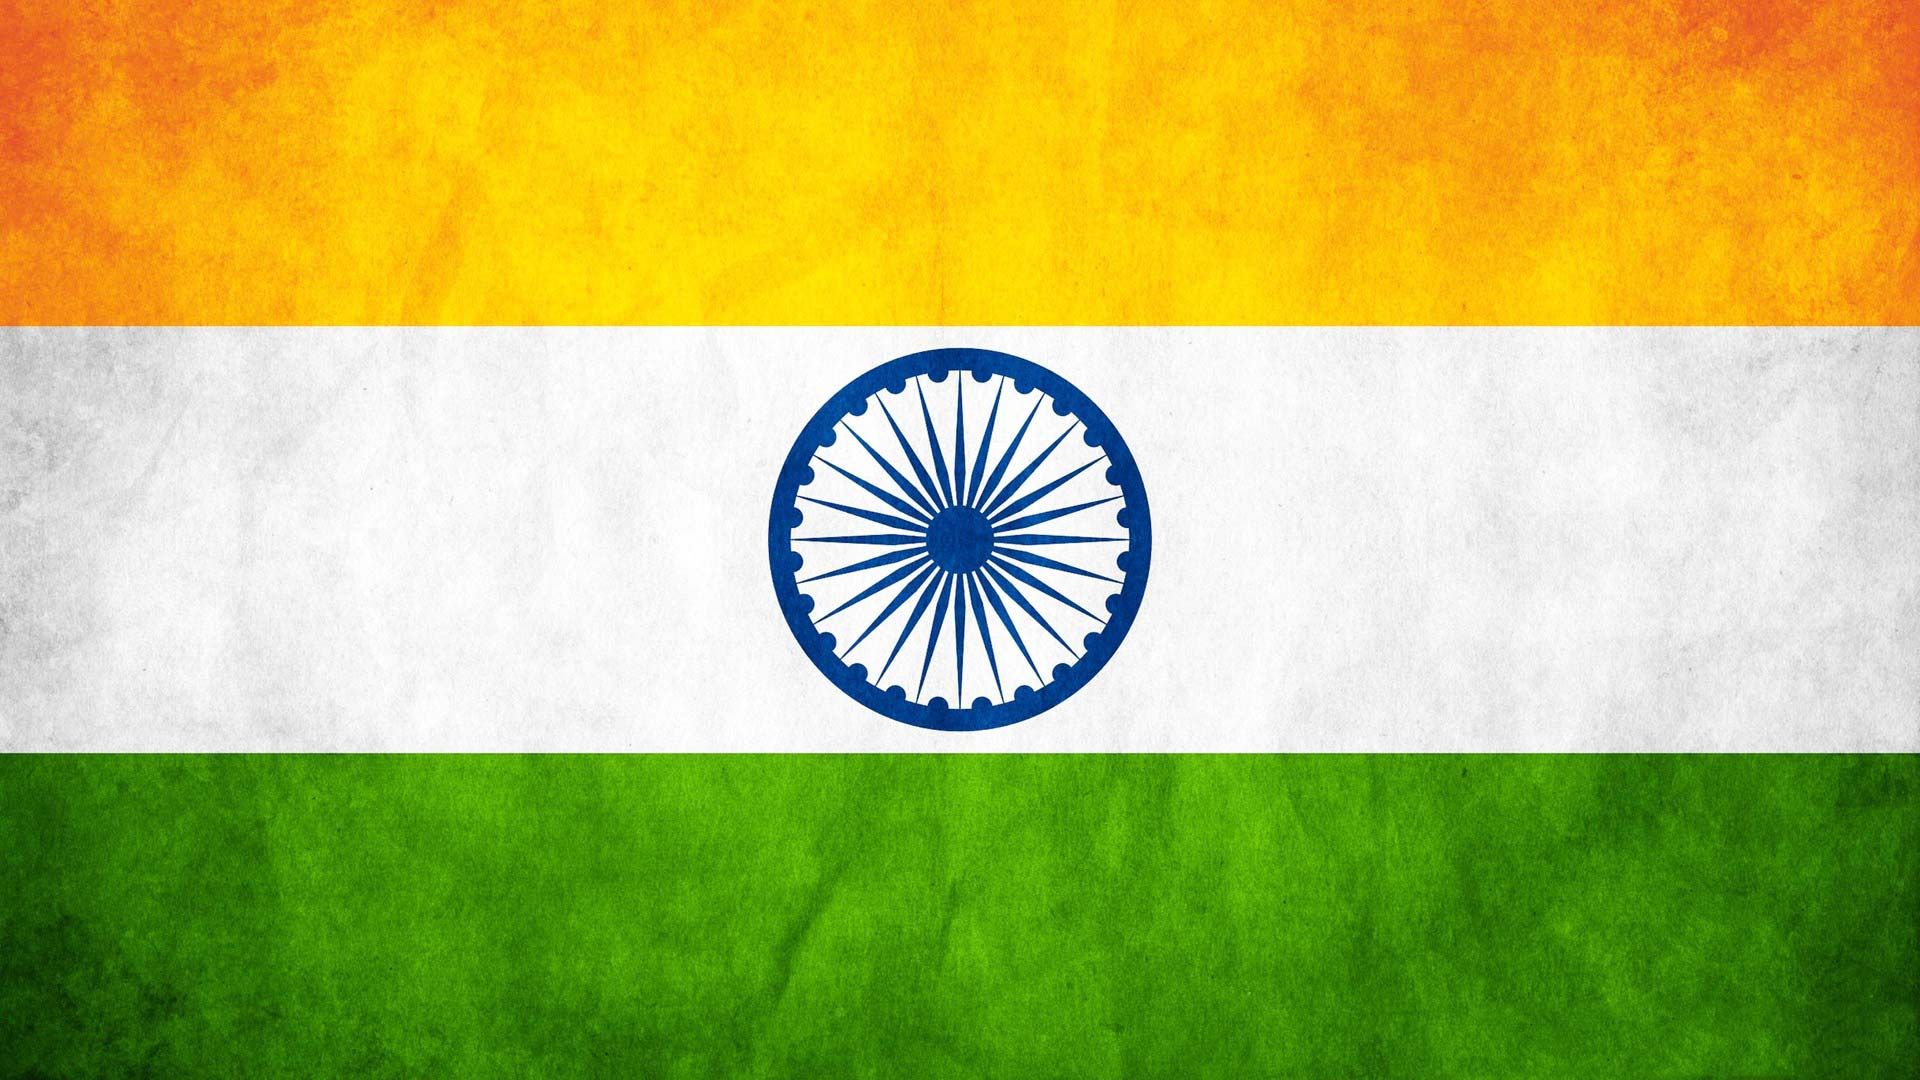 India Flag. Indian flag wallpaper, Indian flag image, India flag